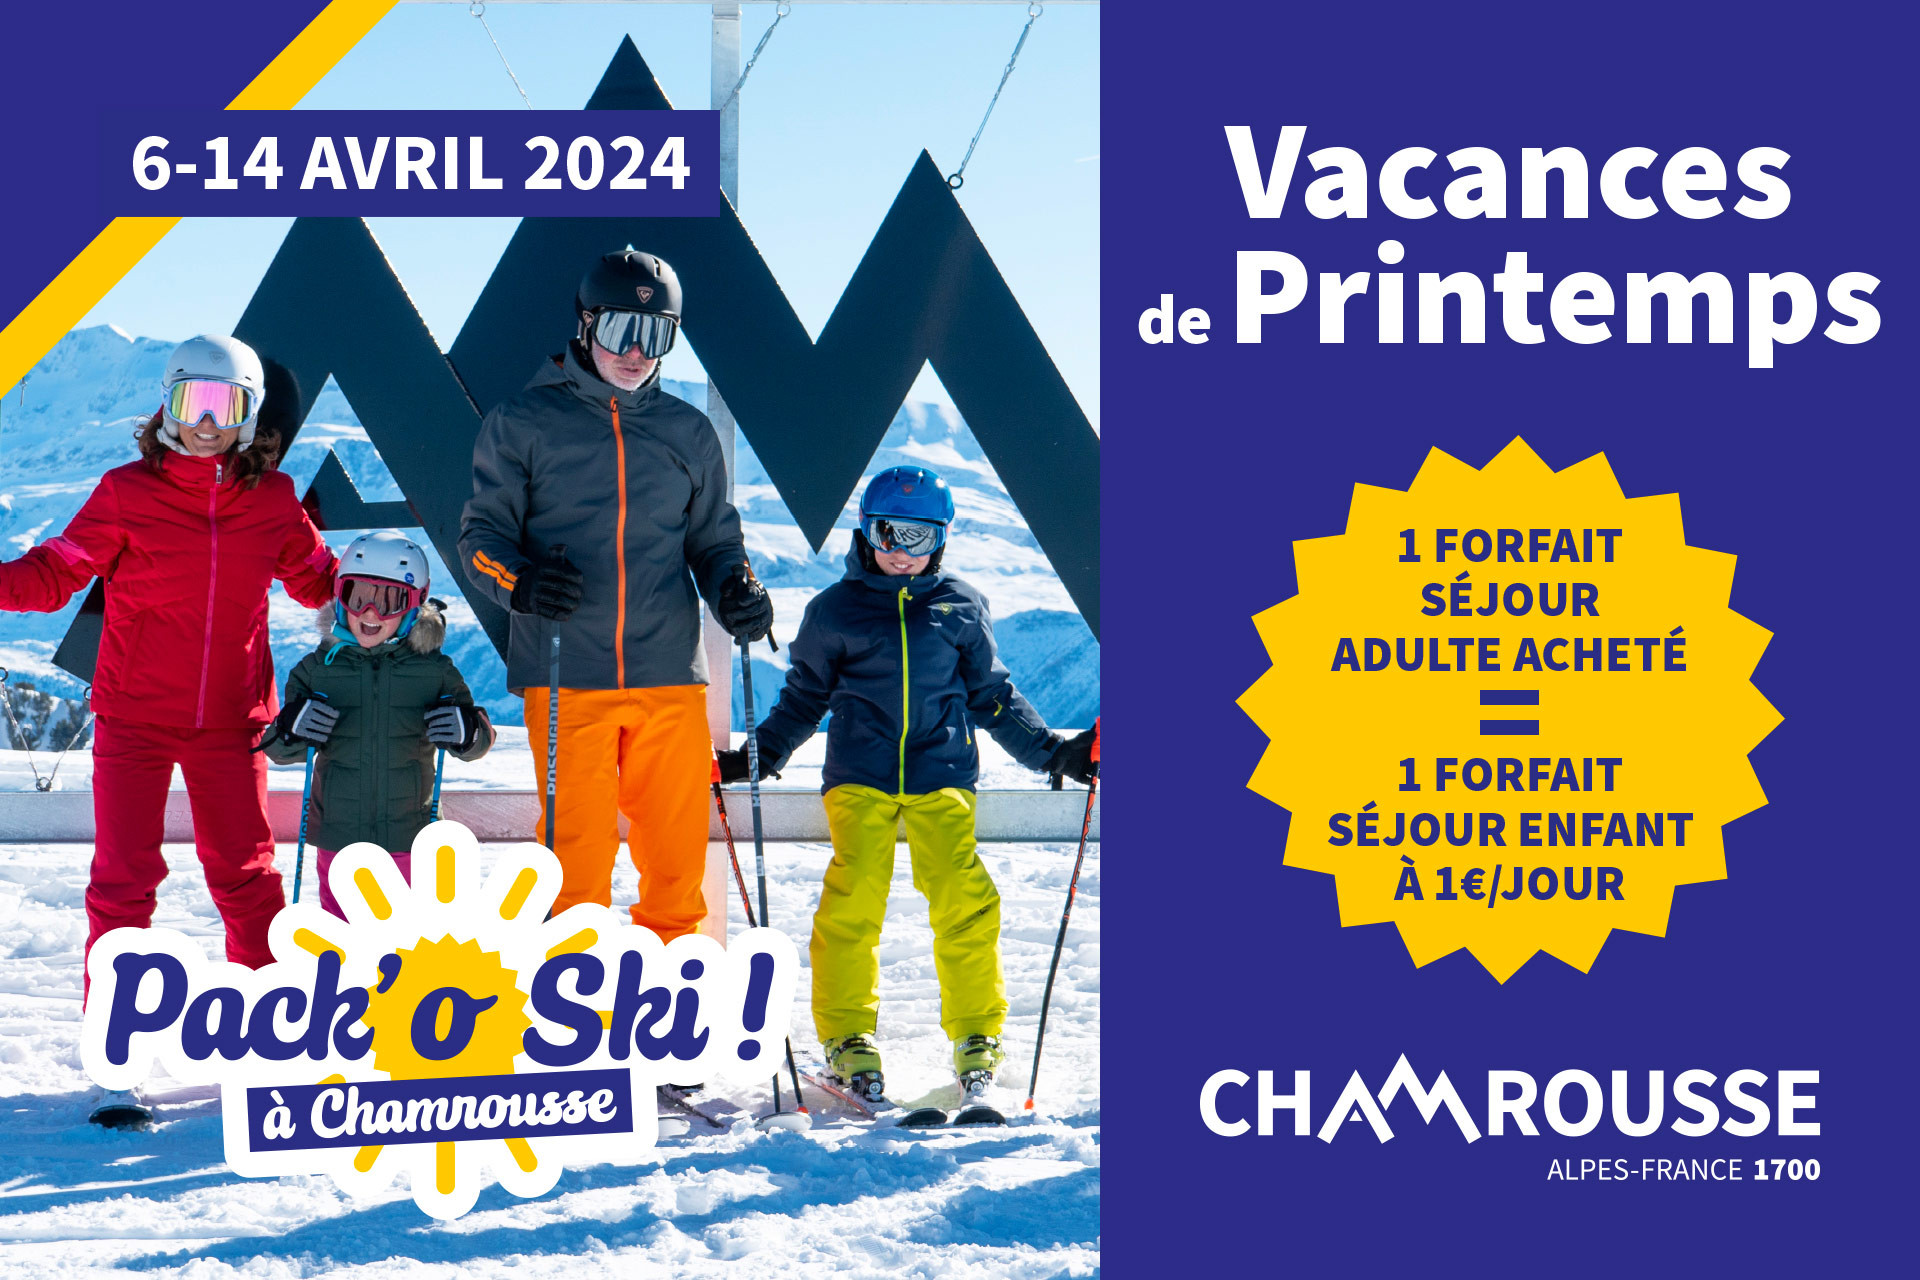 Chamrousse pack'o ski vacances printemps famille station montagne grenoble isère alpes france